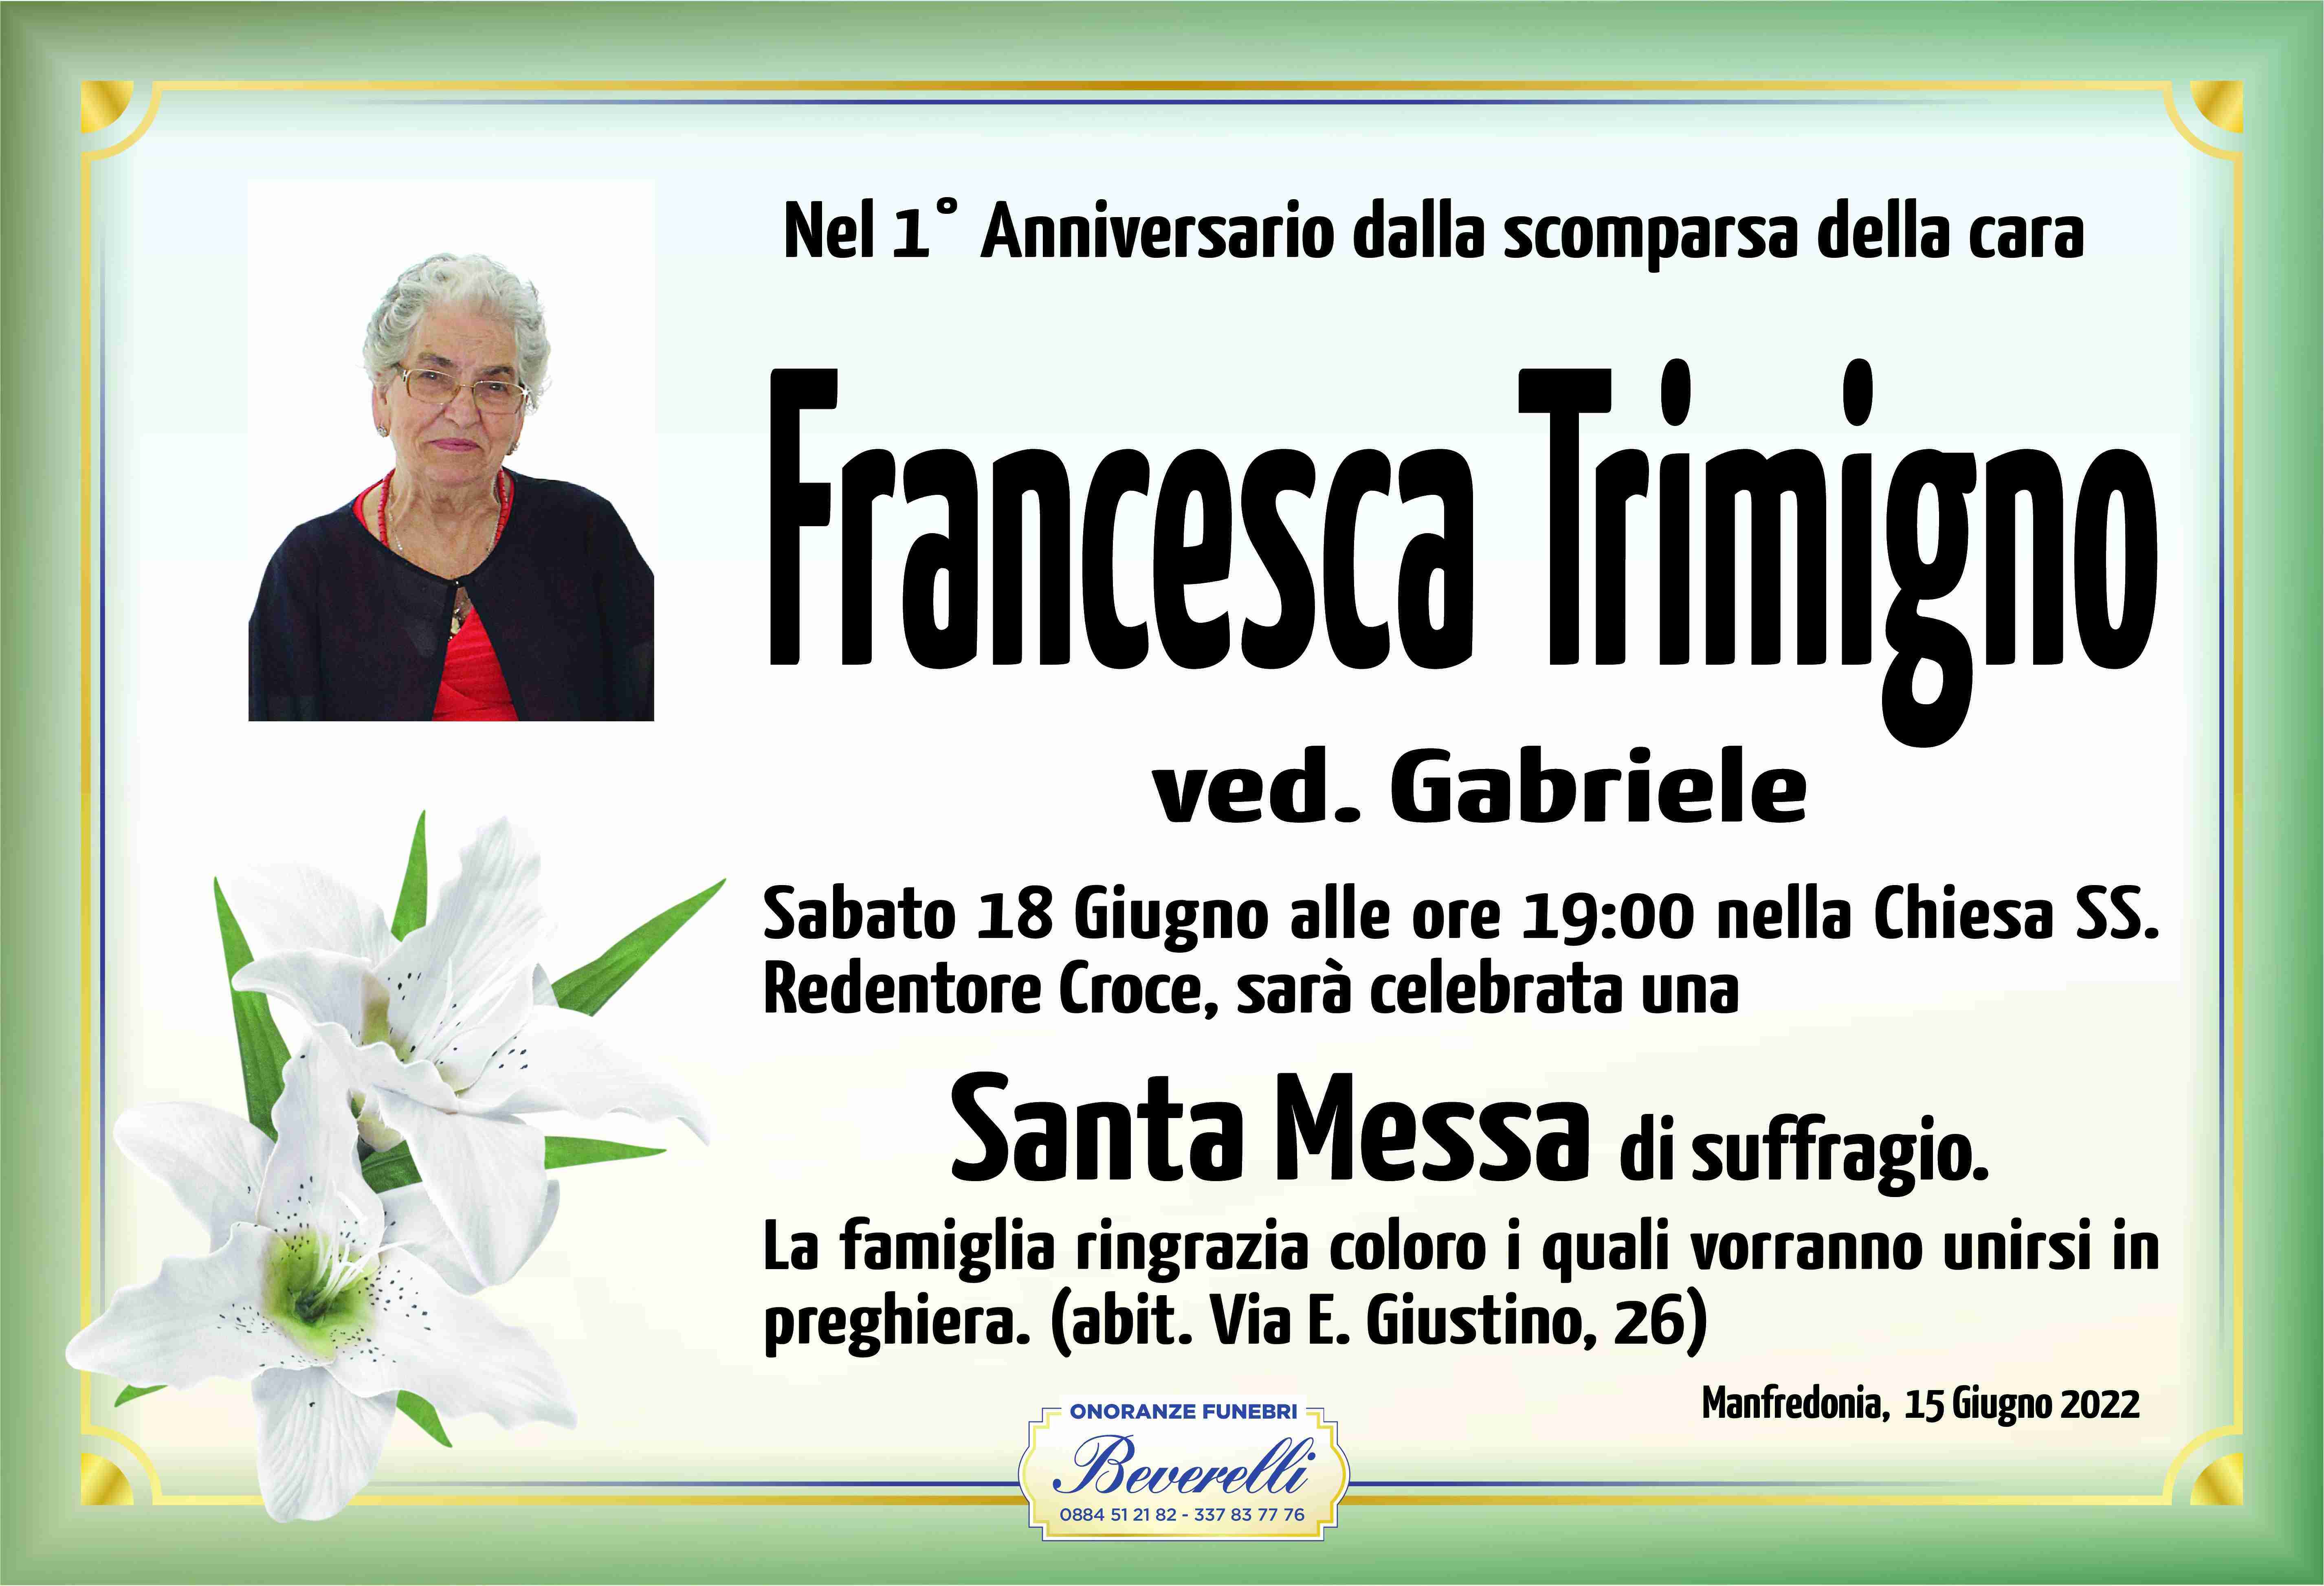 Francesca Trimigno